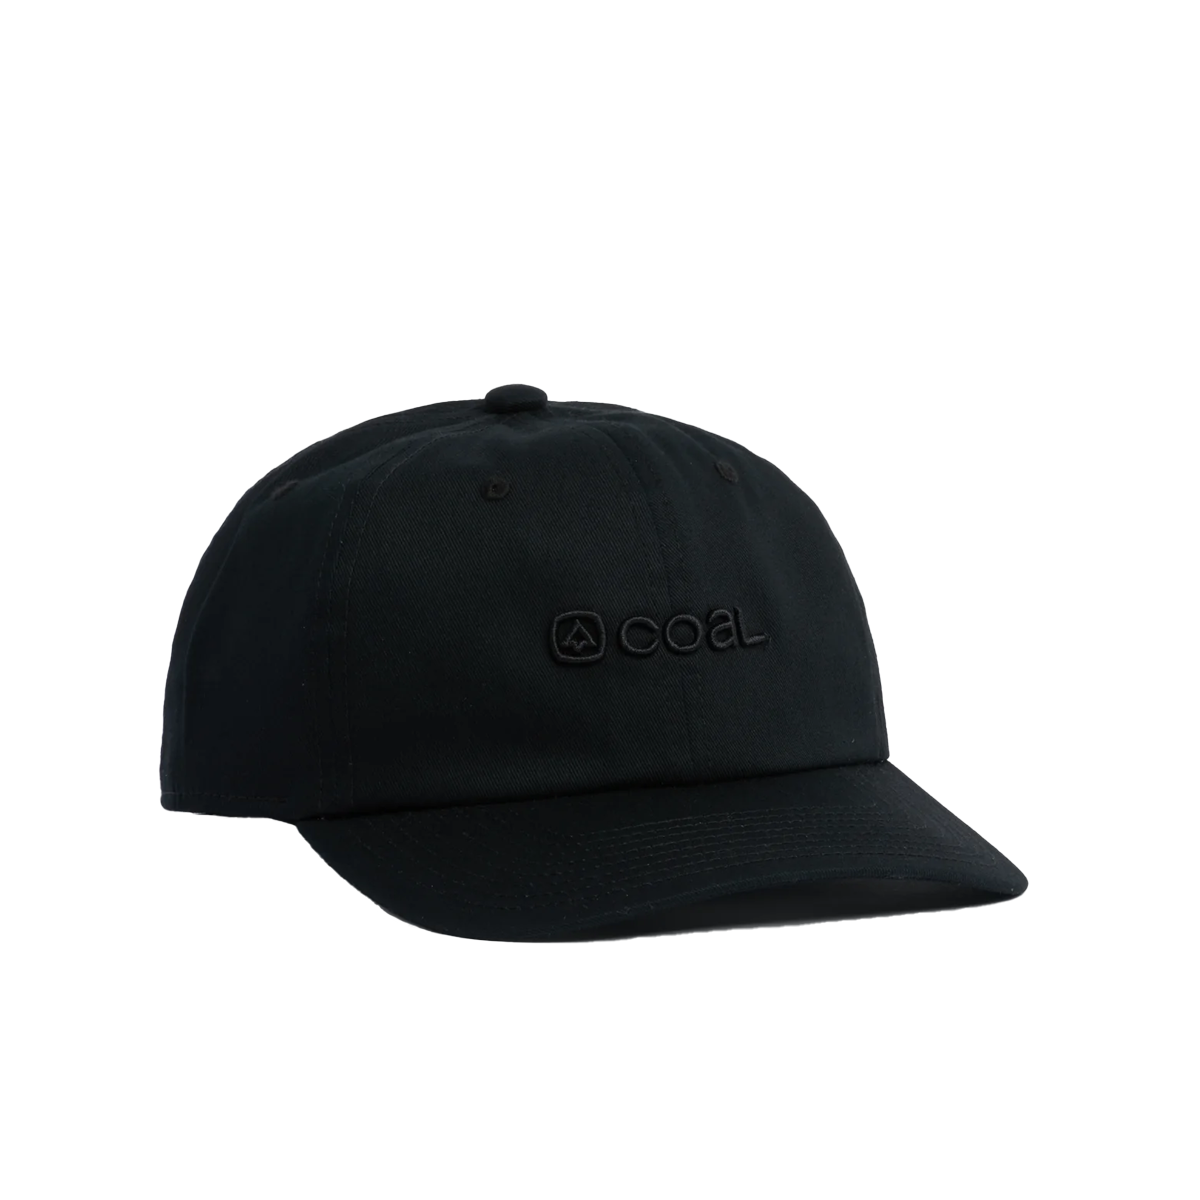 Coal Encore Hat - Assorted Colors